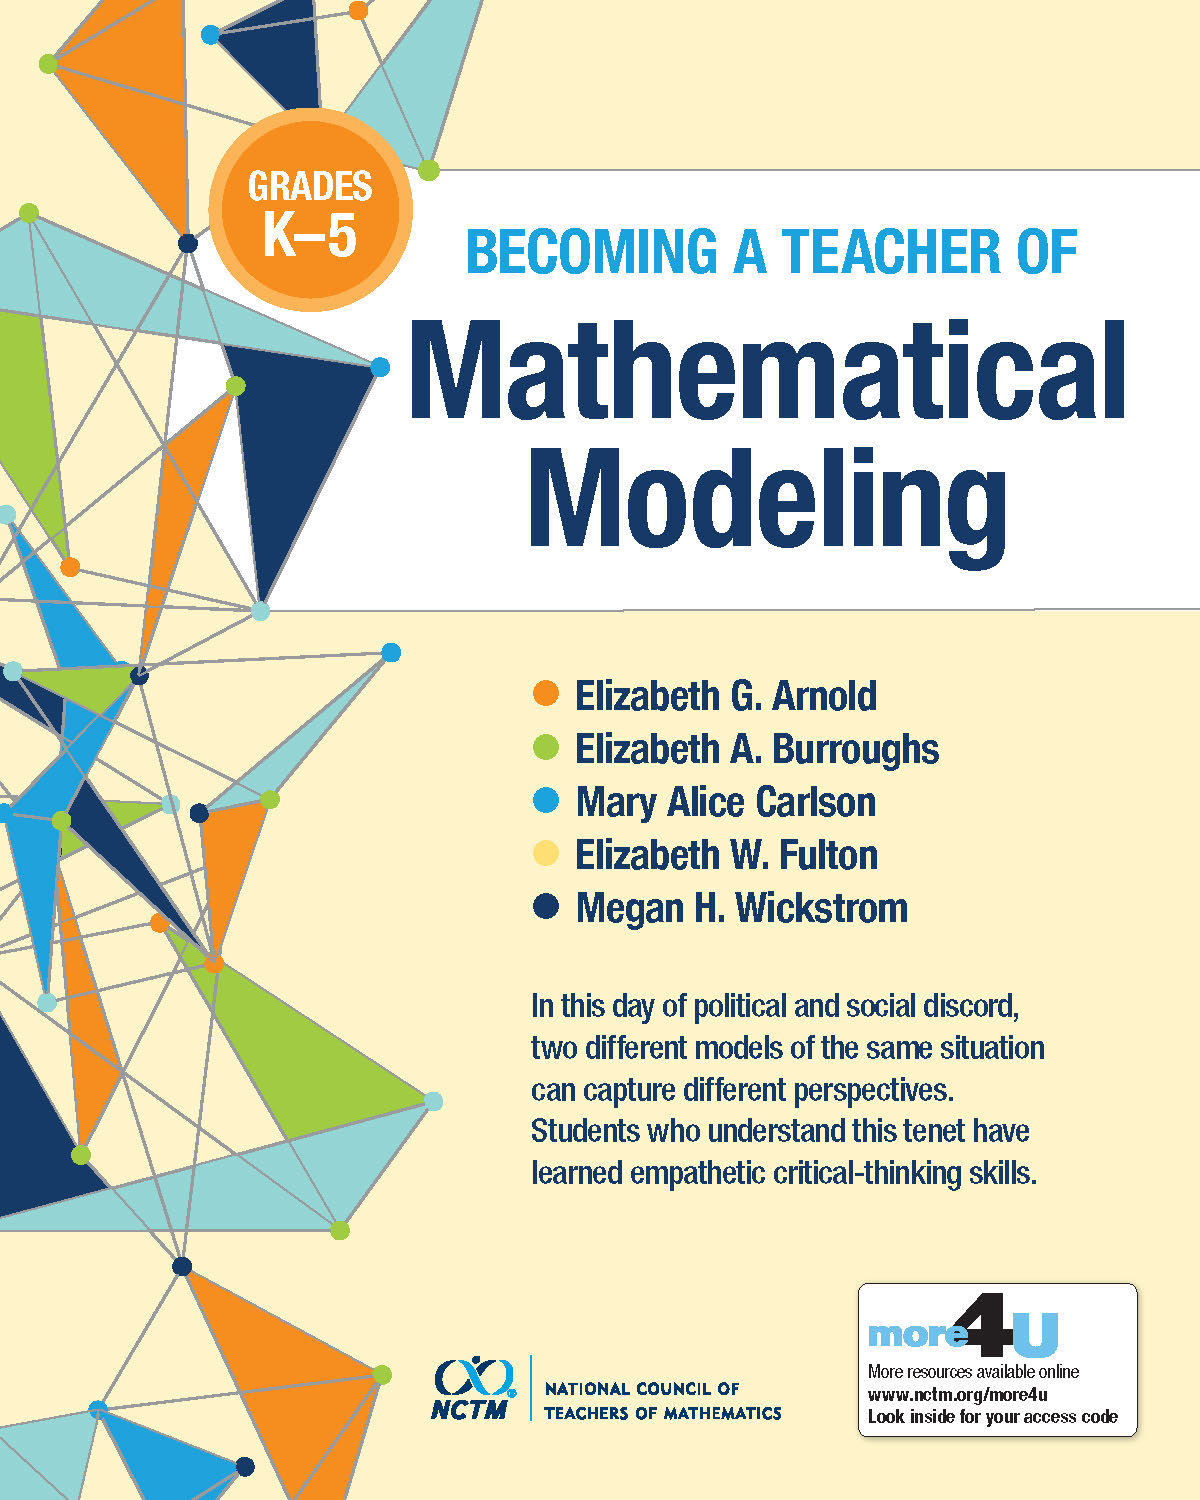 Mathematical Modeling K-5